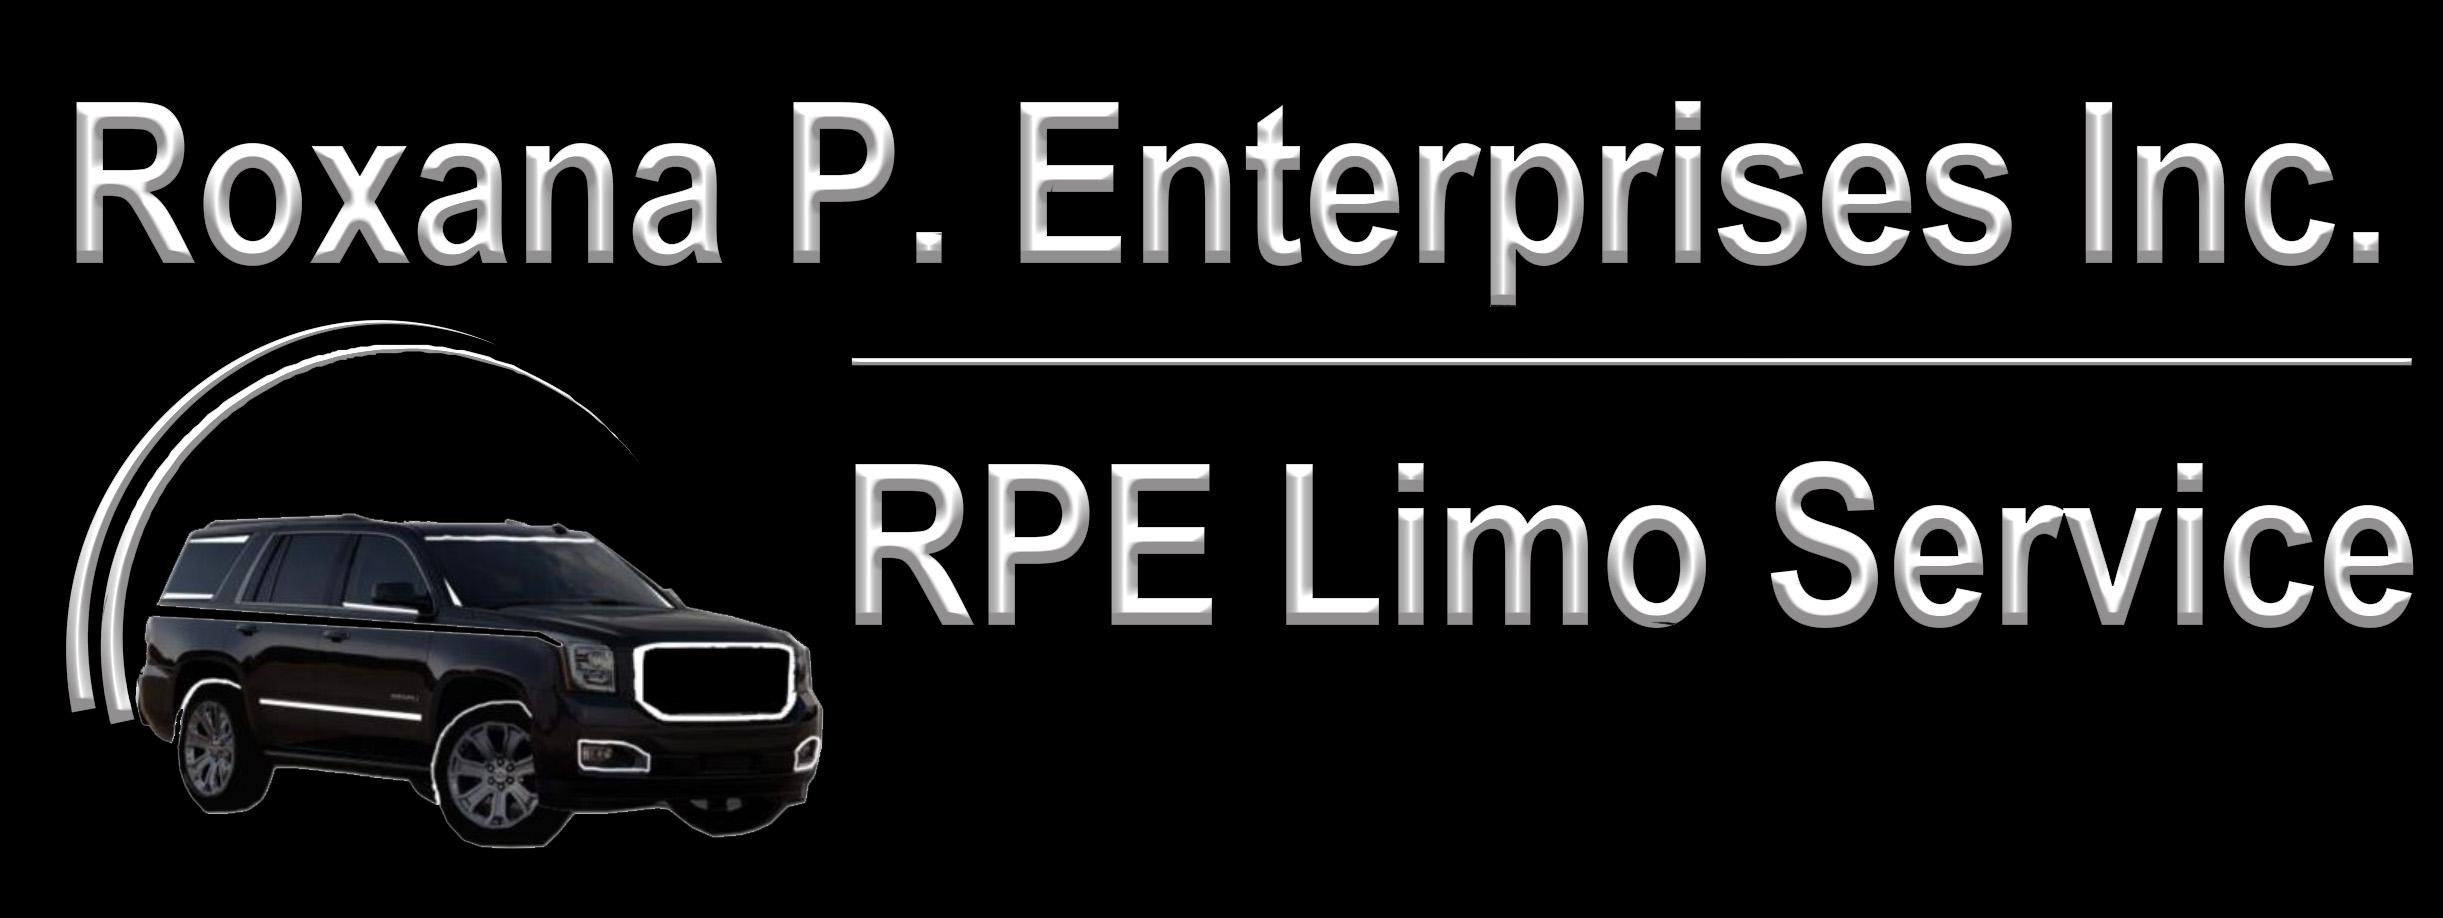 RPE TRANSPORTATION & LIMO SERVICE